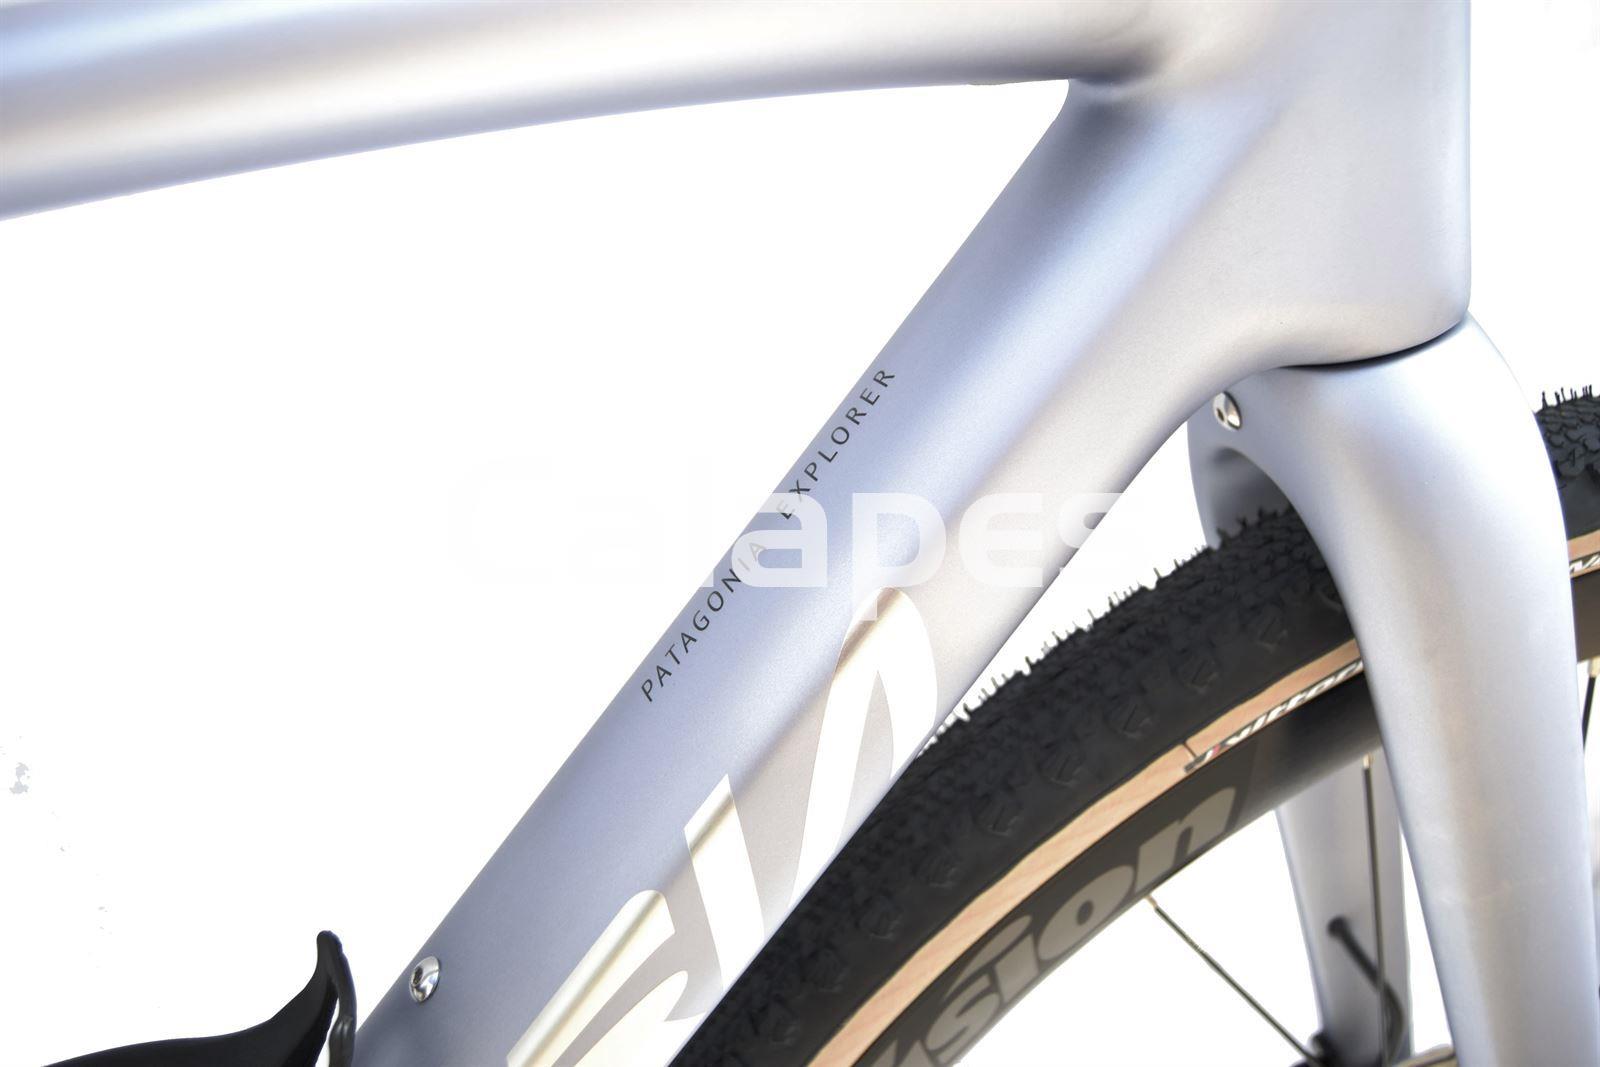 Bicicleta Gravel Vitoria Patagonia Explorer Pro Shimano 105 2x11v - Imagen 2